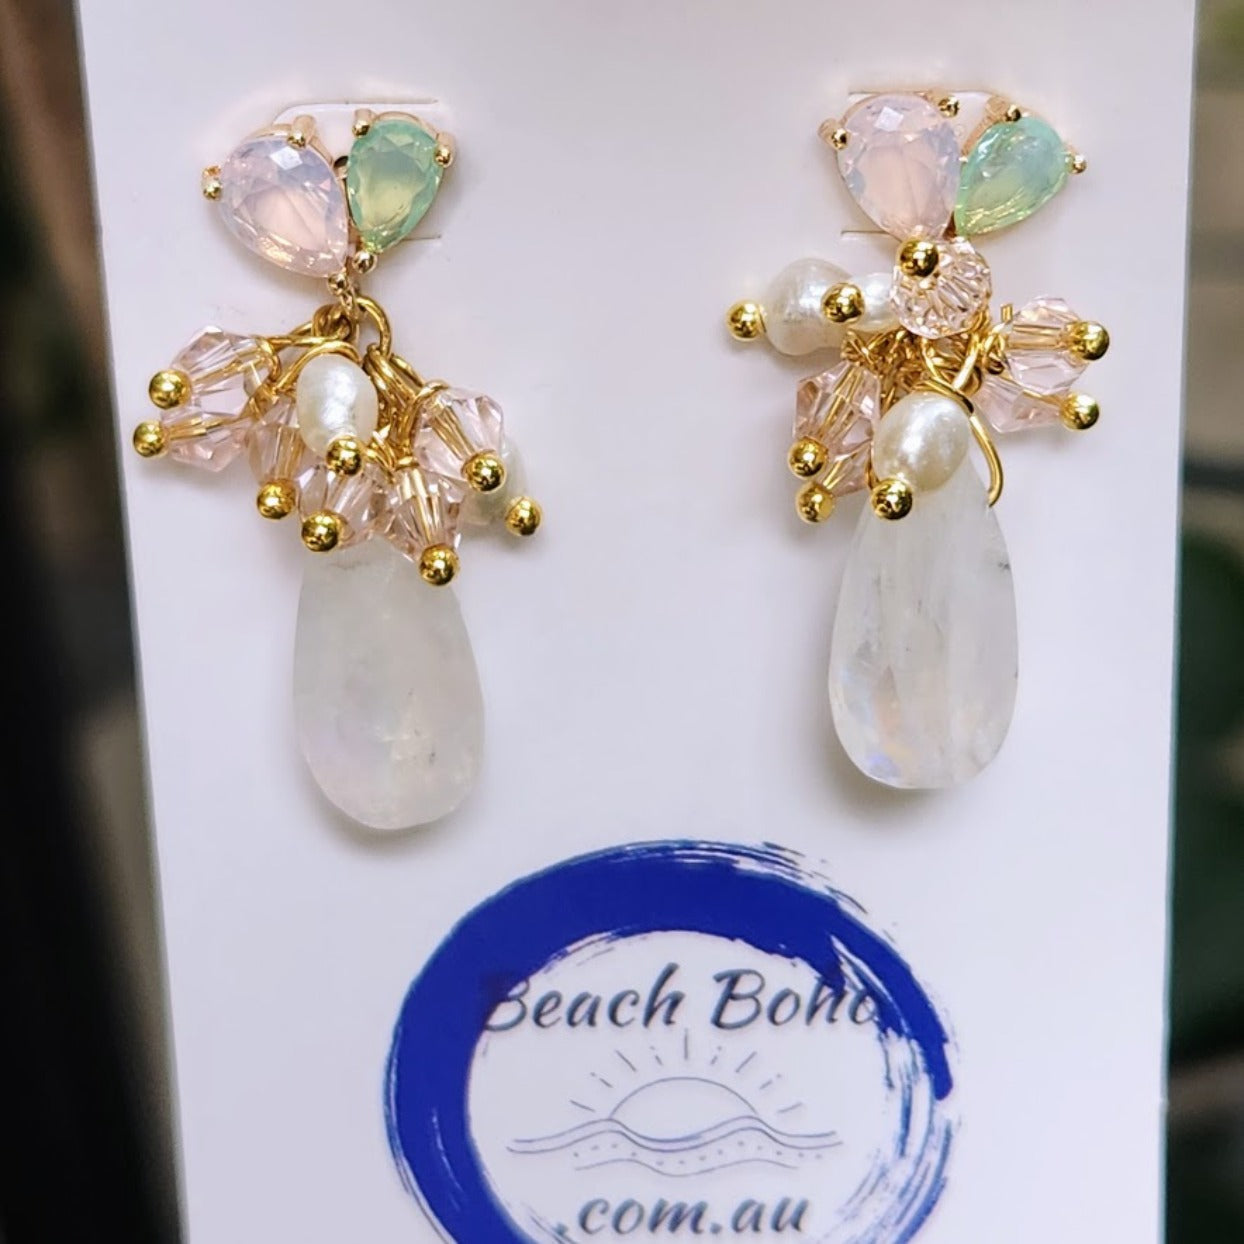 LITTLE PEARLS - MOONSTONE & PEARL CRYSTAL STUD EARRINGS - Premium earrings from www.beachboho.com.au - Just $75! Shop now at www.beachboho.com.au